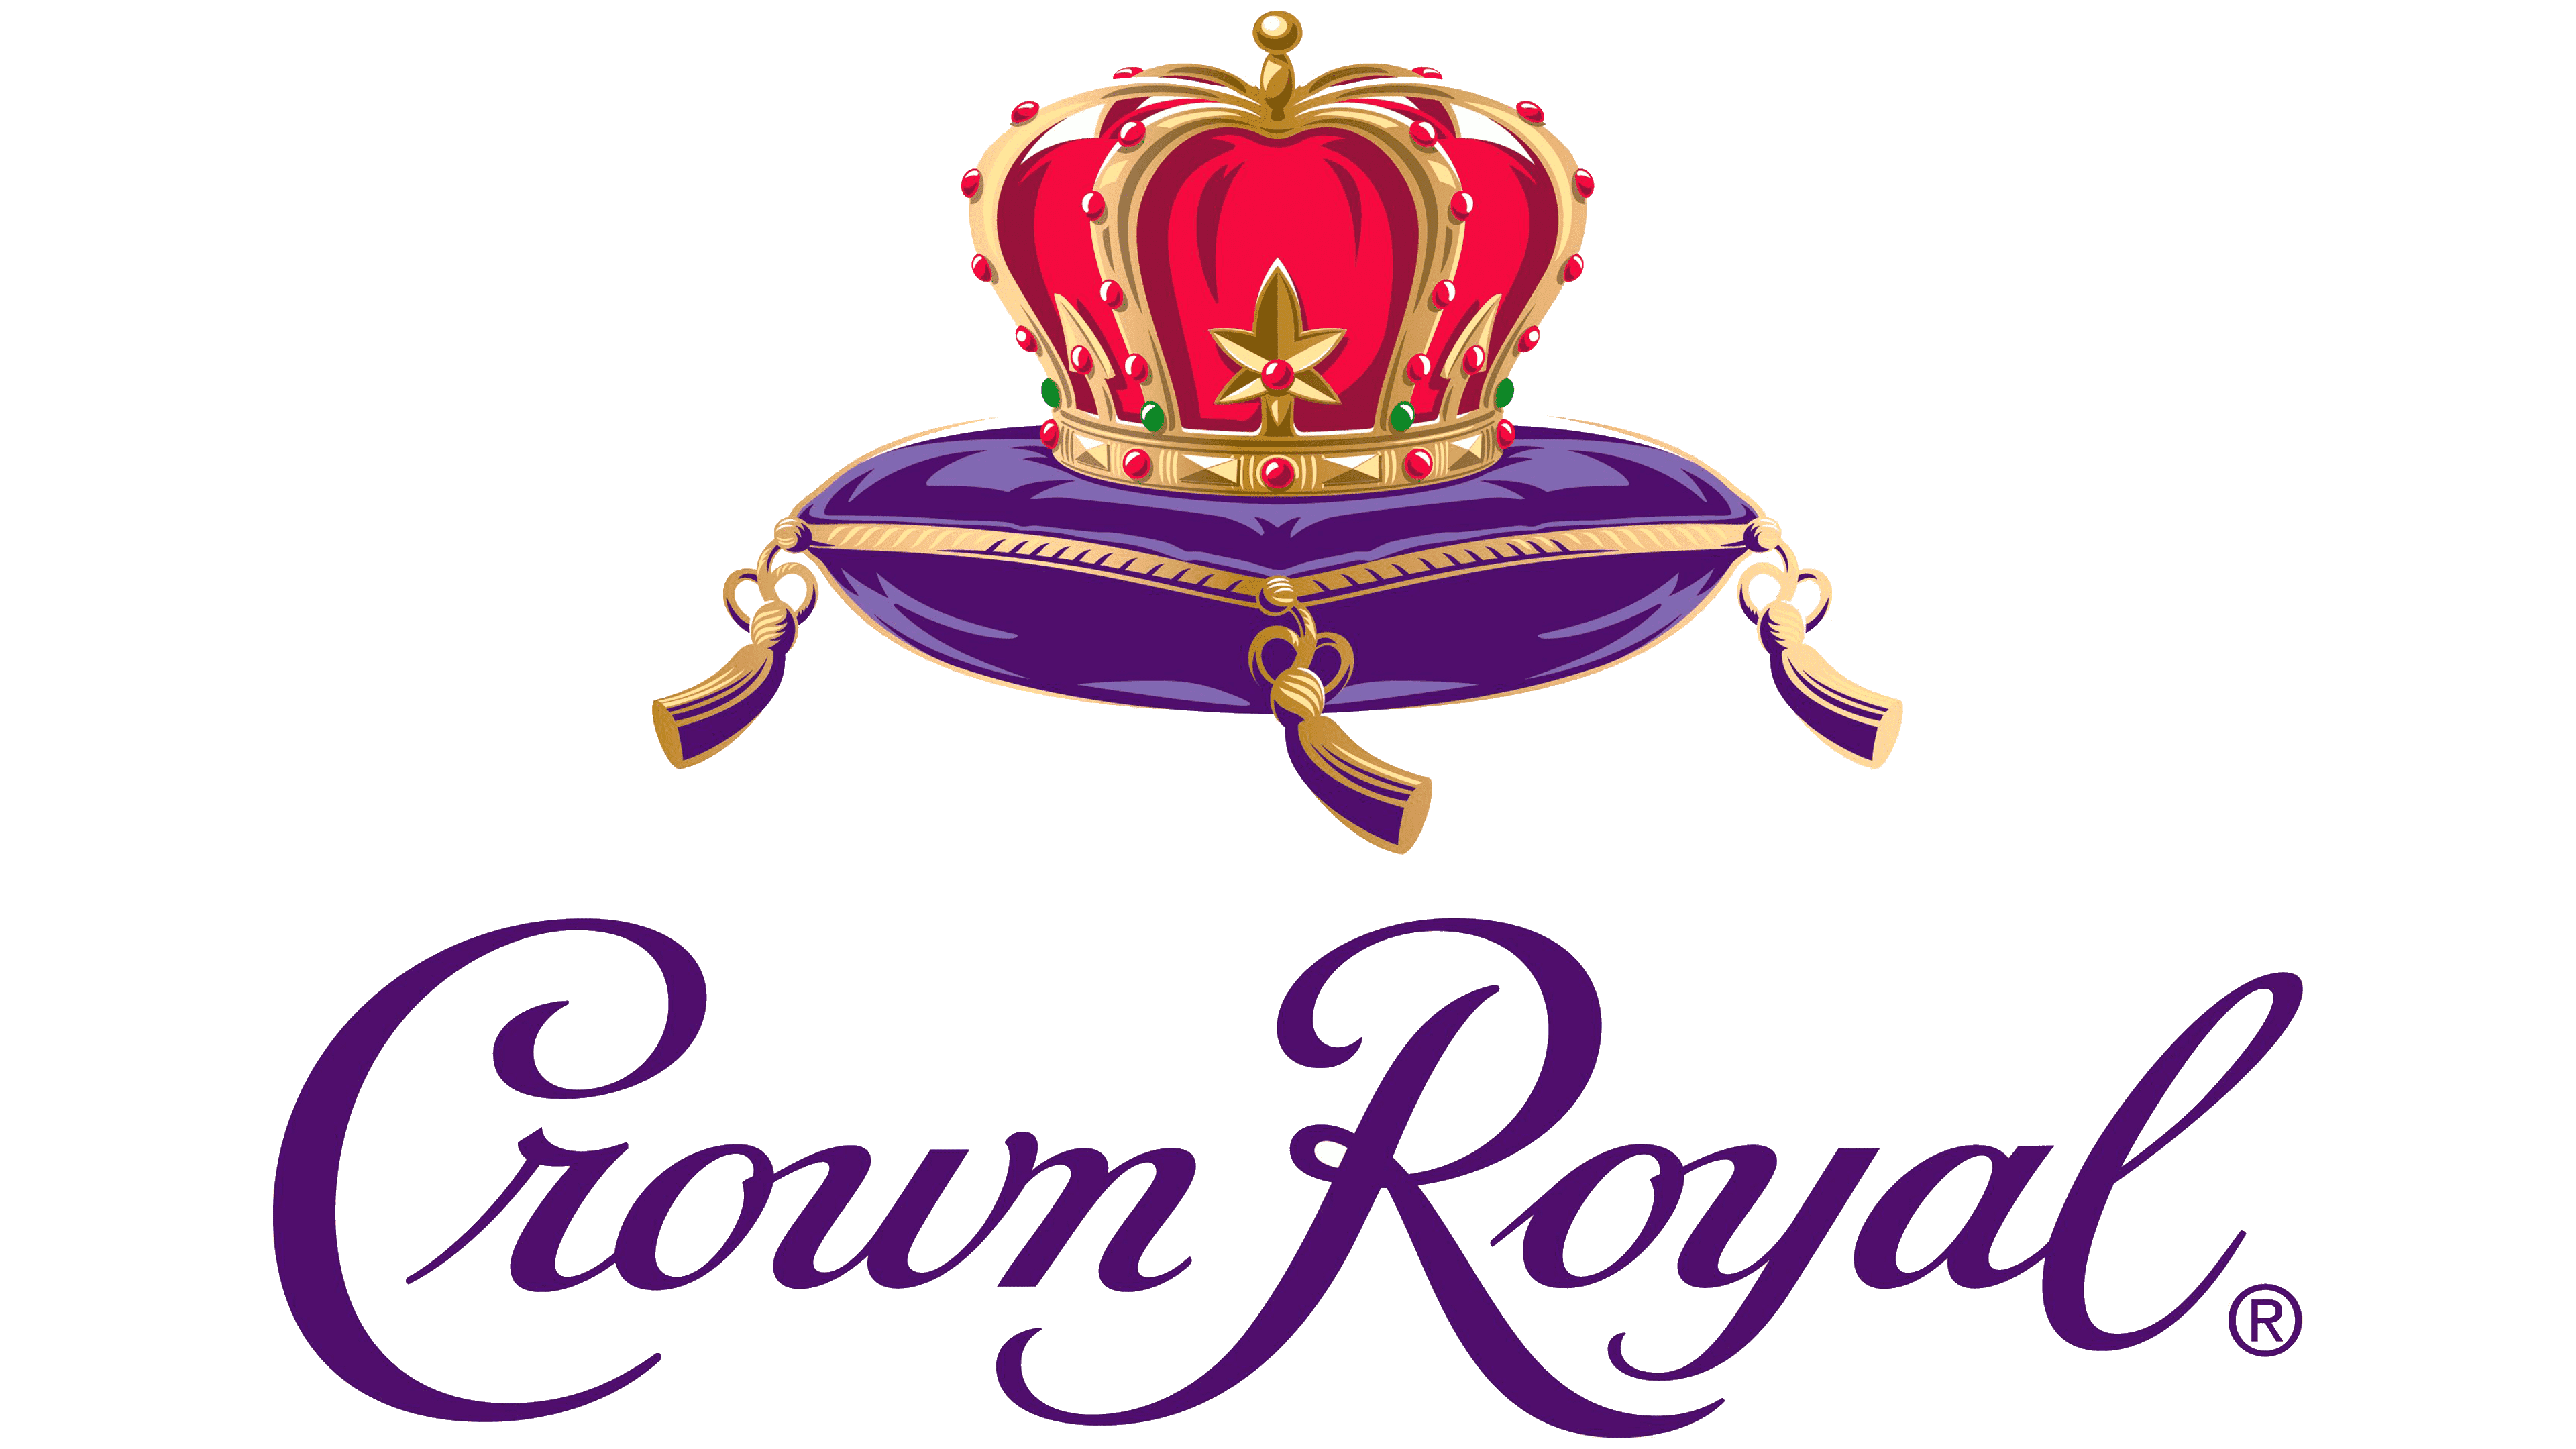 Royal Logos - 215+ Best Royal Logo Ideas. Free Royal Logo Maker. | 99designs